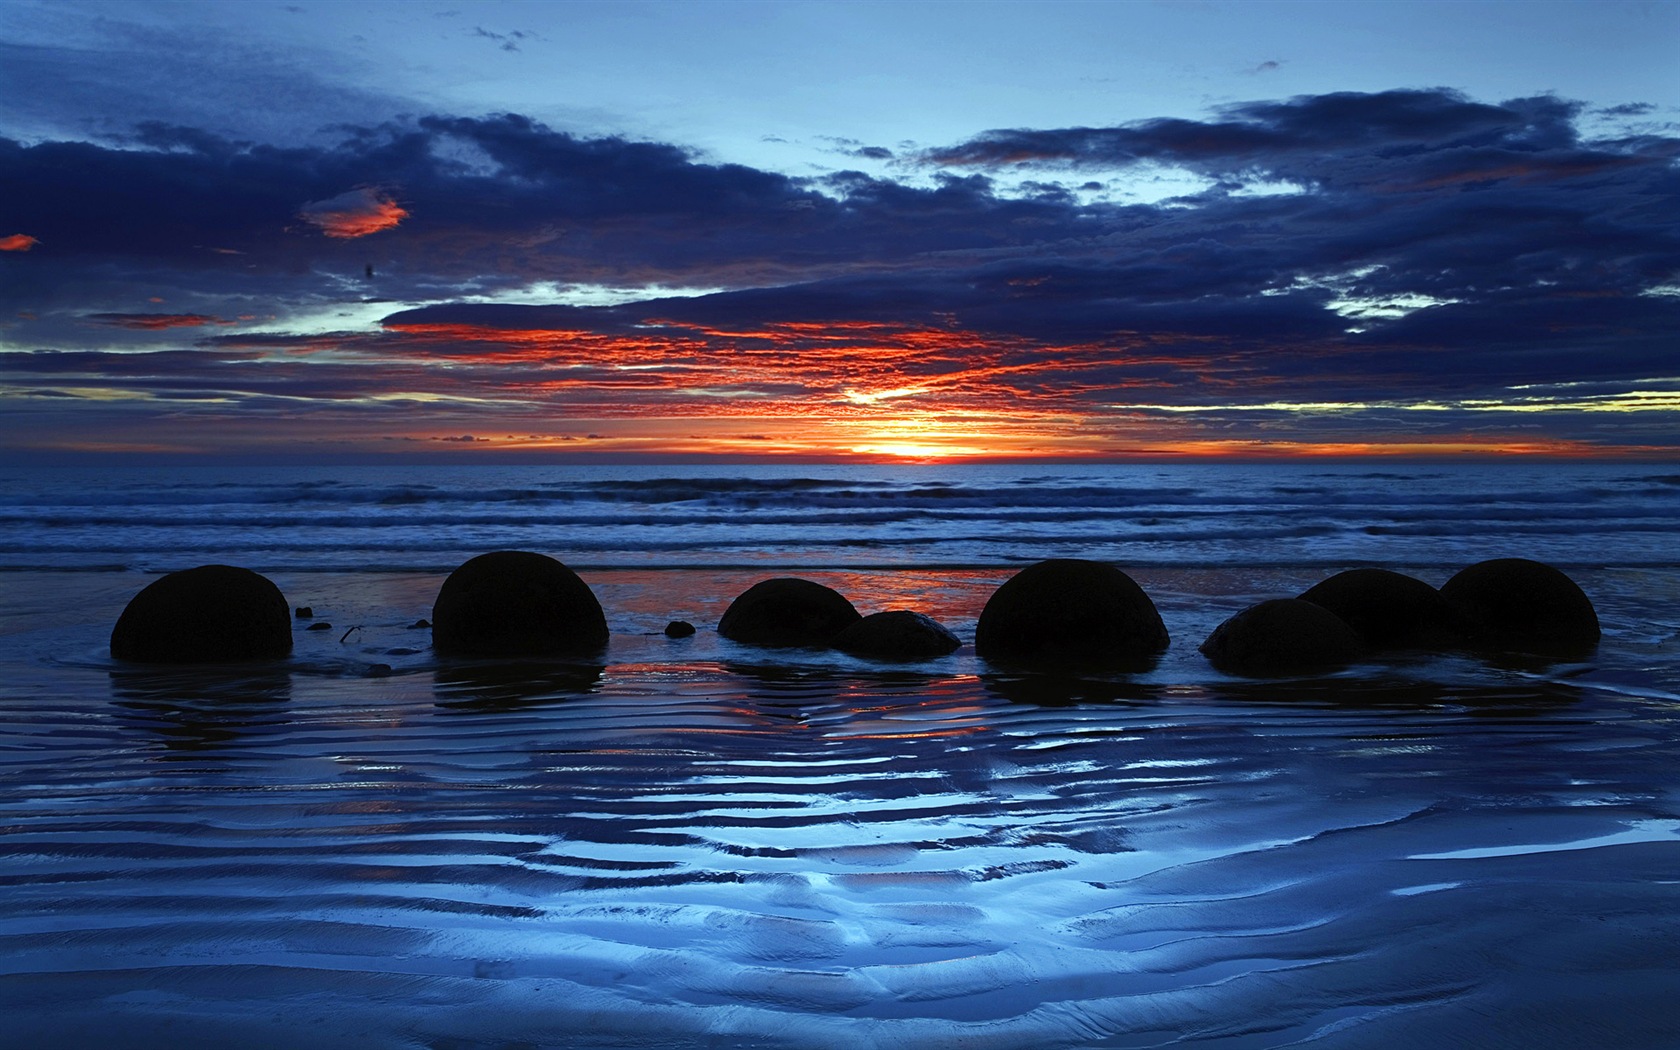 Windows 8 theme wallpaper: Beach sunrise and sunset views #14 - 1680x1050